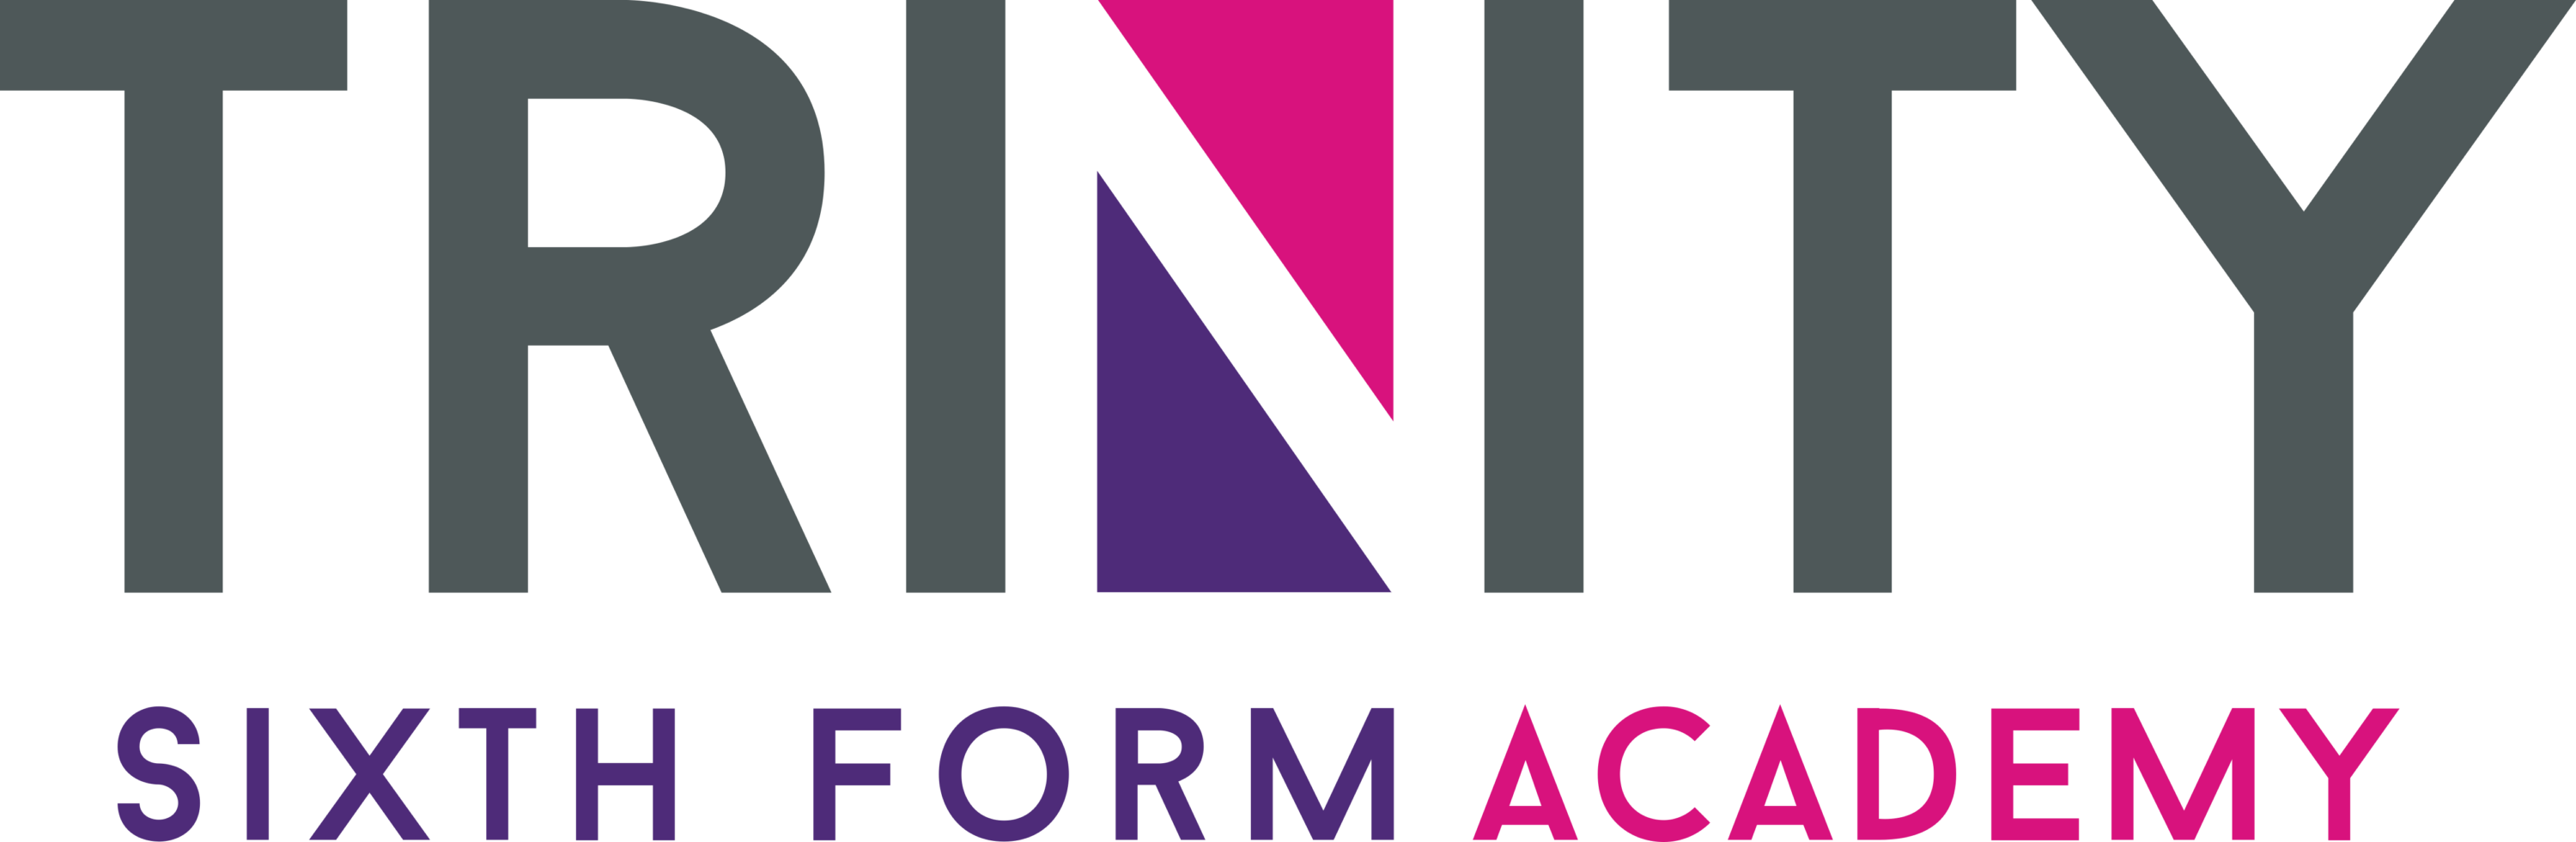 Trinity Sixth Form Academy Logo